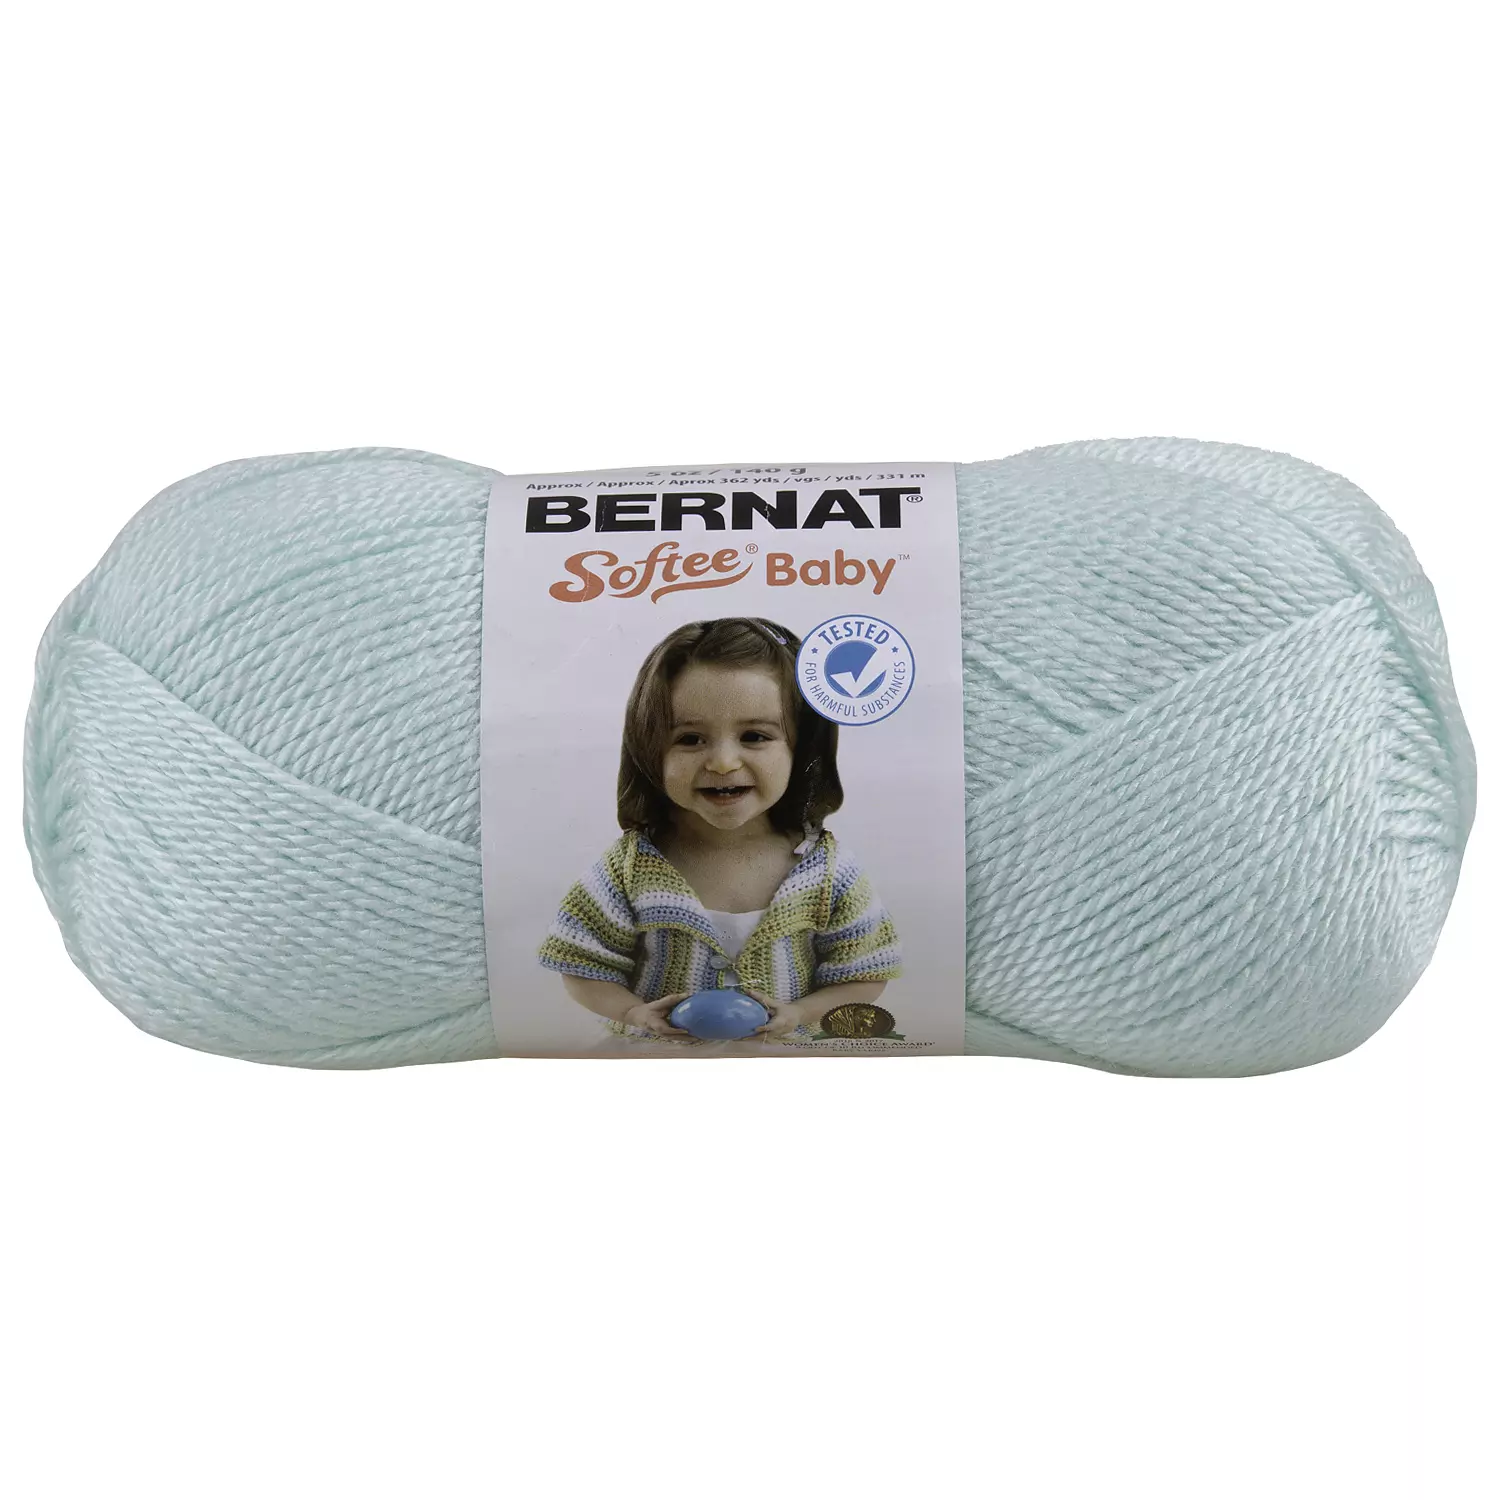 Bernat Softee Baby - Acrylic Baby Yarn, mint